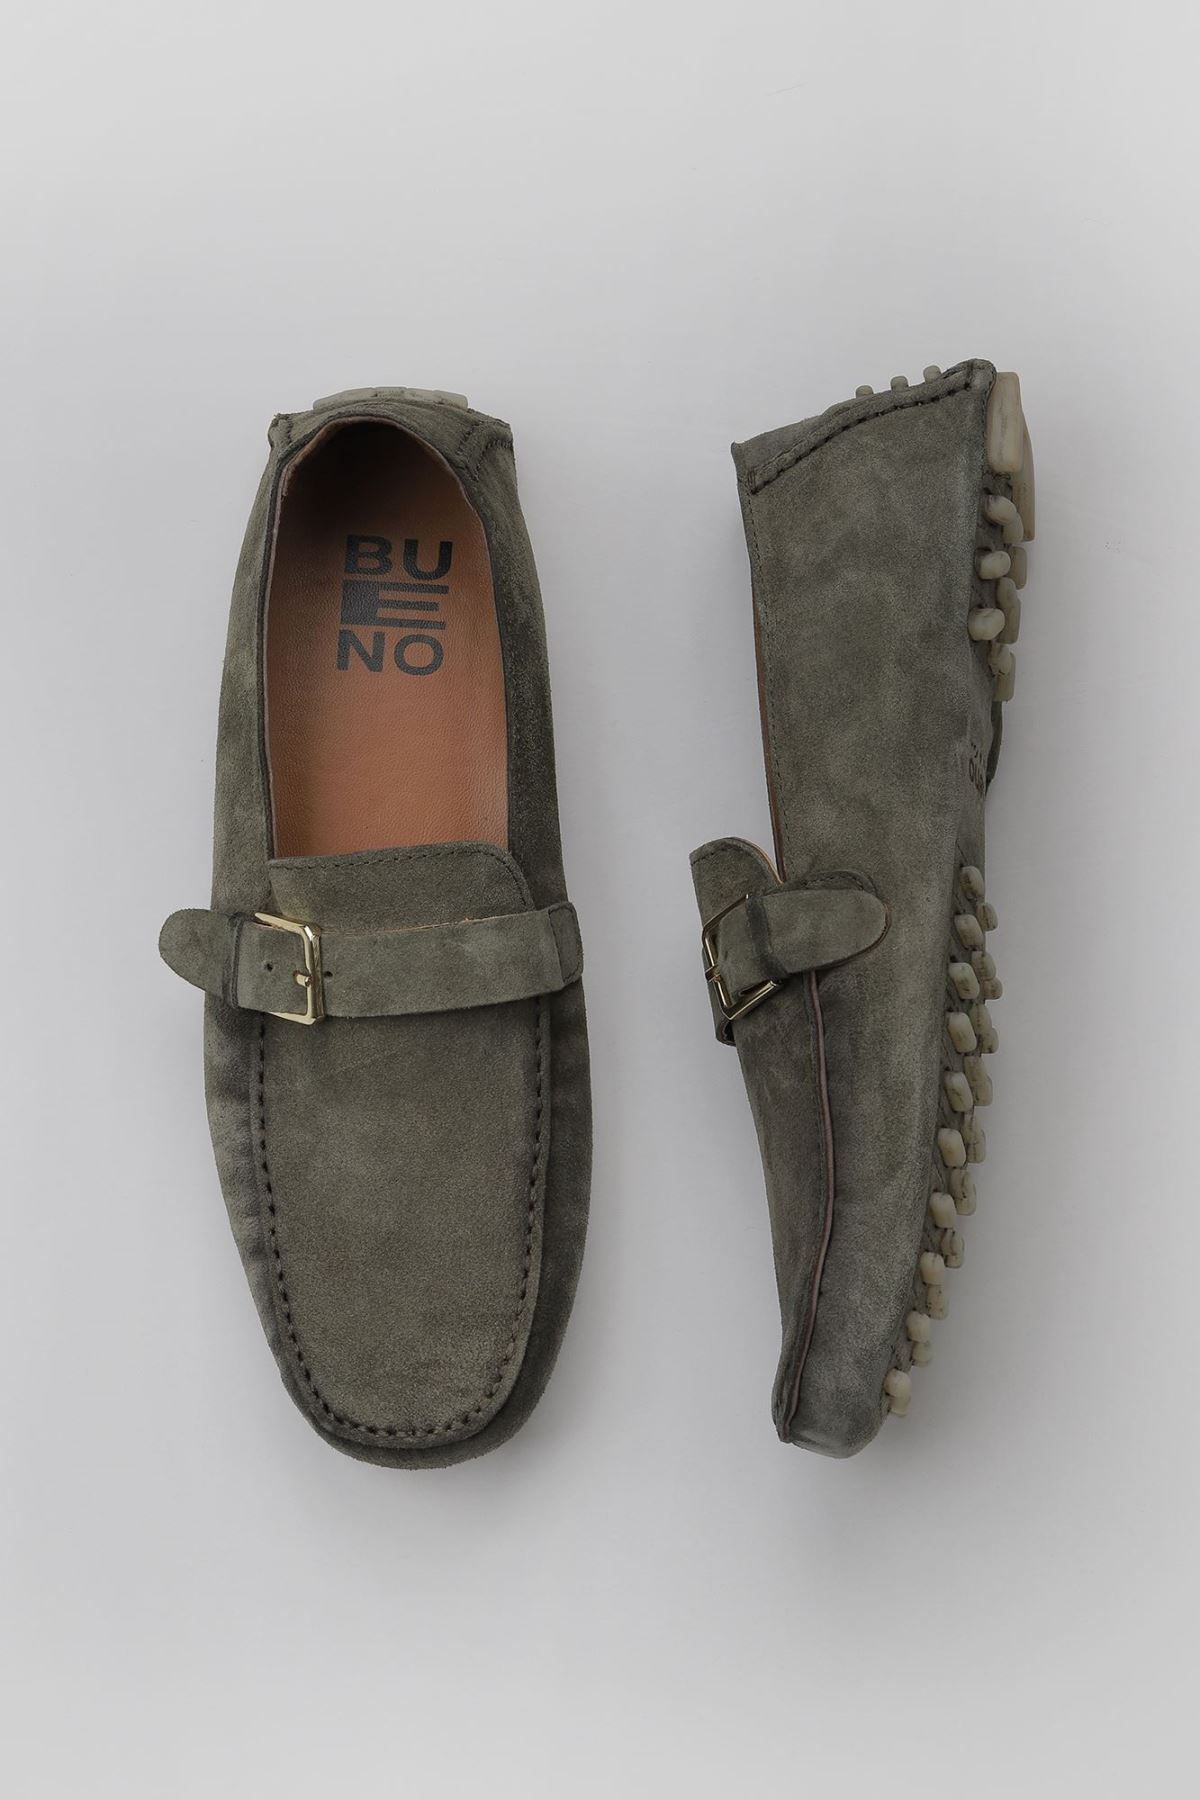 Bueno Shoes Haki Açık Süet Erkek Loafer